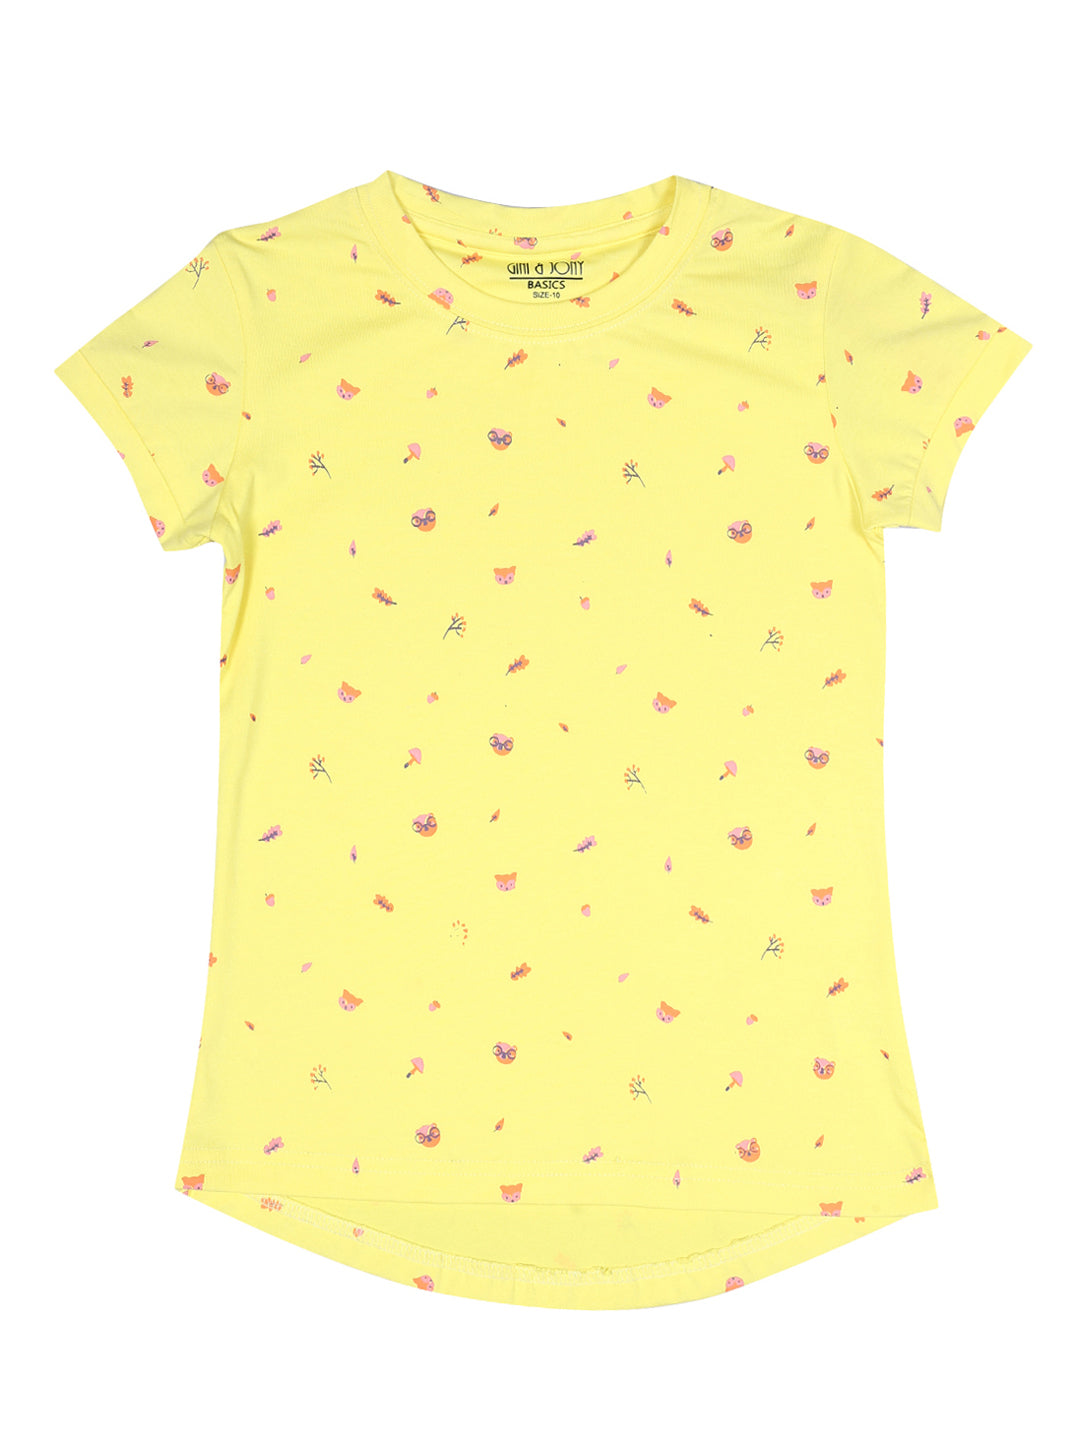 Girls Yellow Printed Knits Knits Top